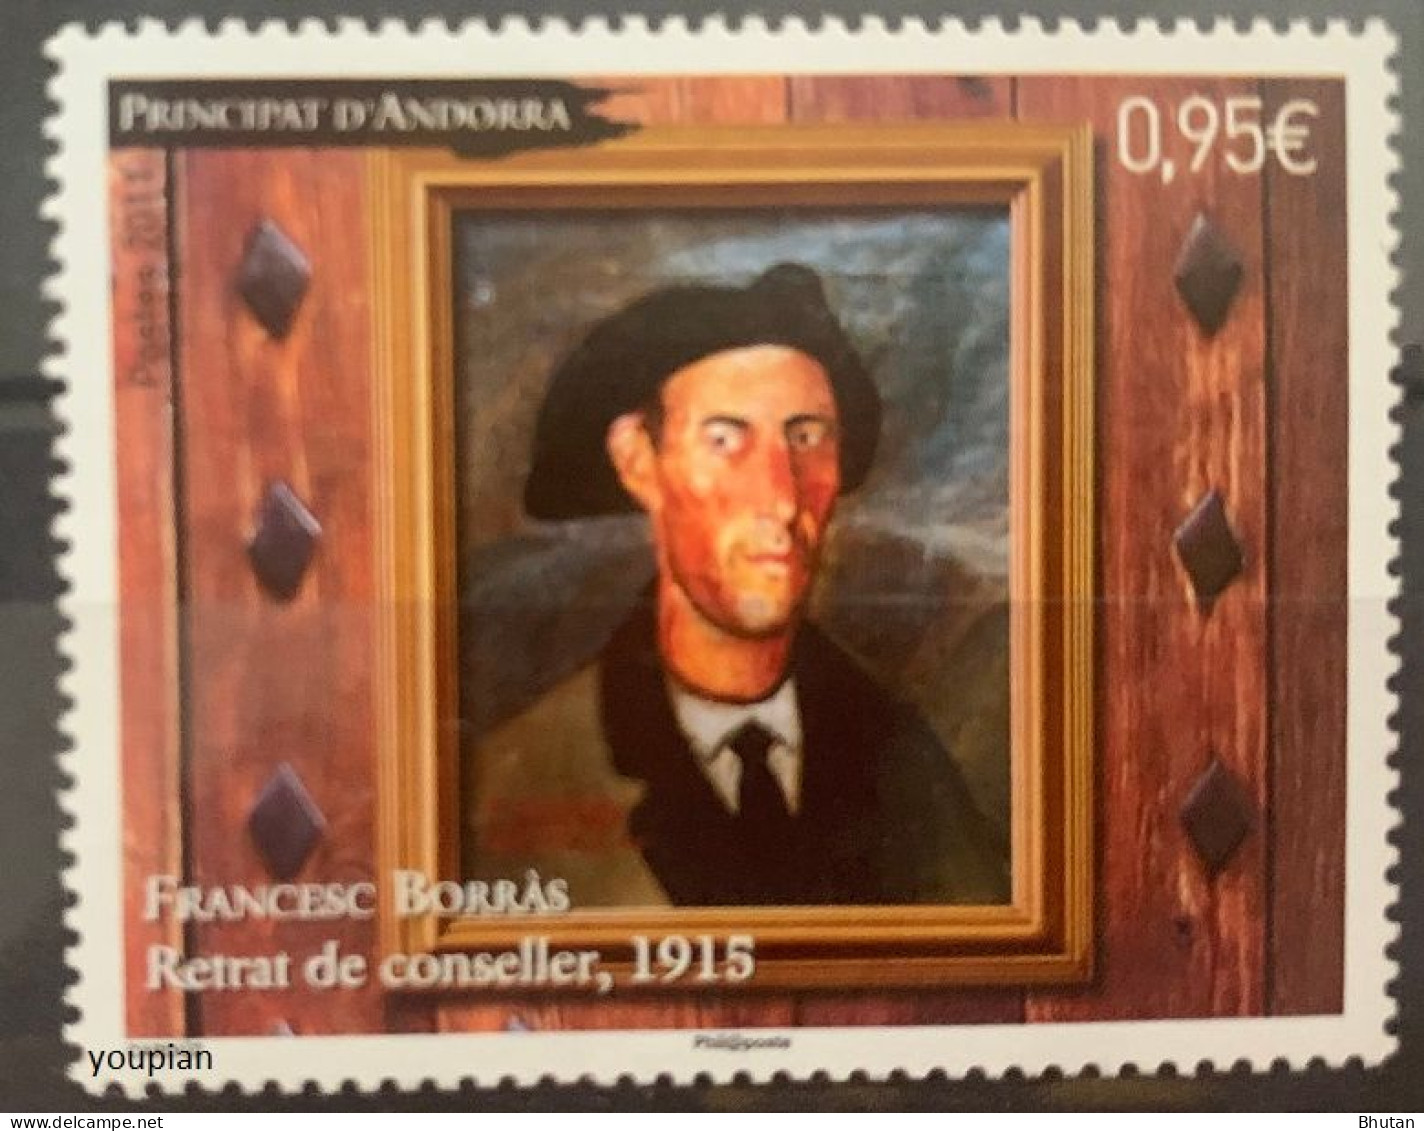 Andorra (French Post) 2011, Art, MNH Single Stamp - Nuovi